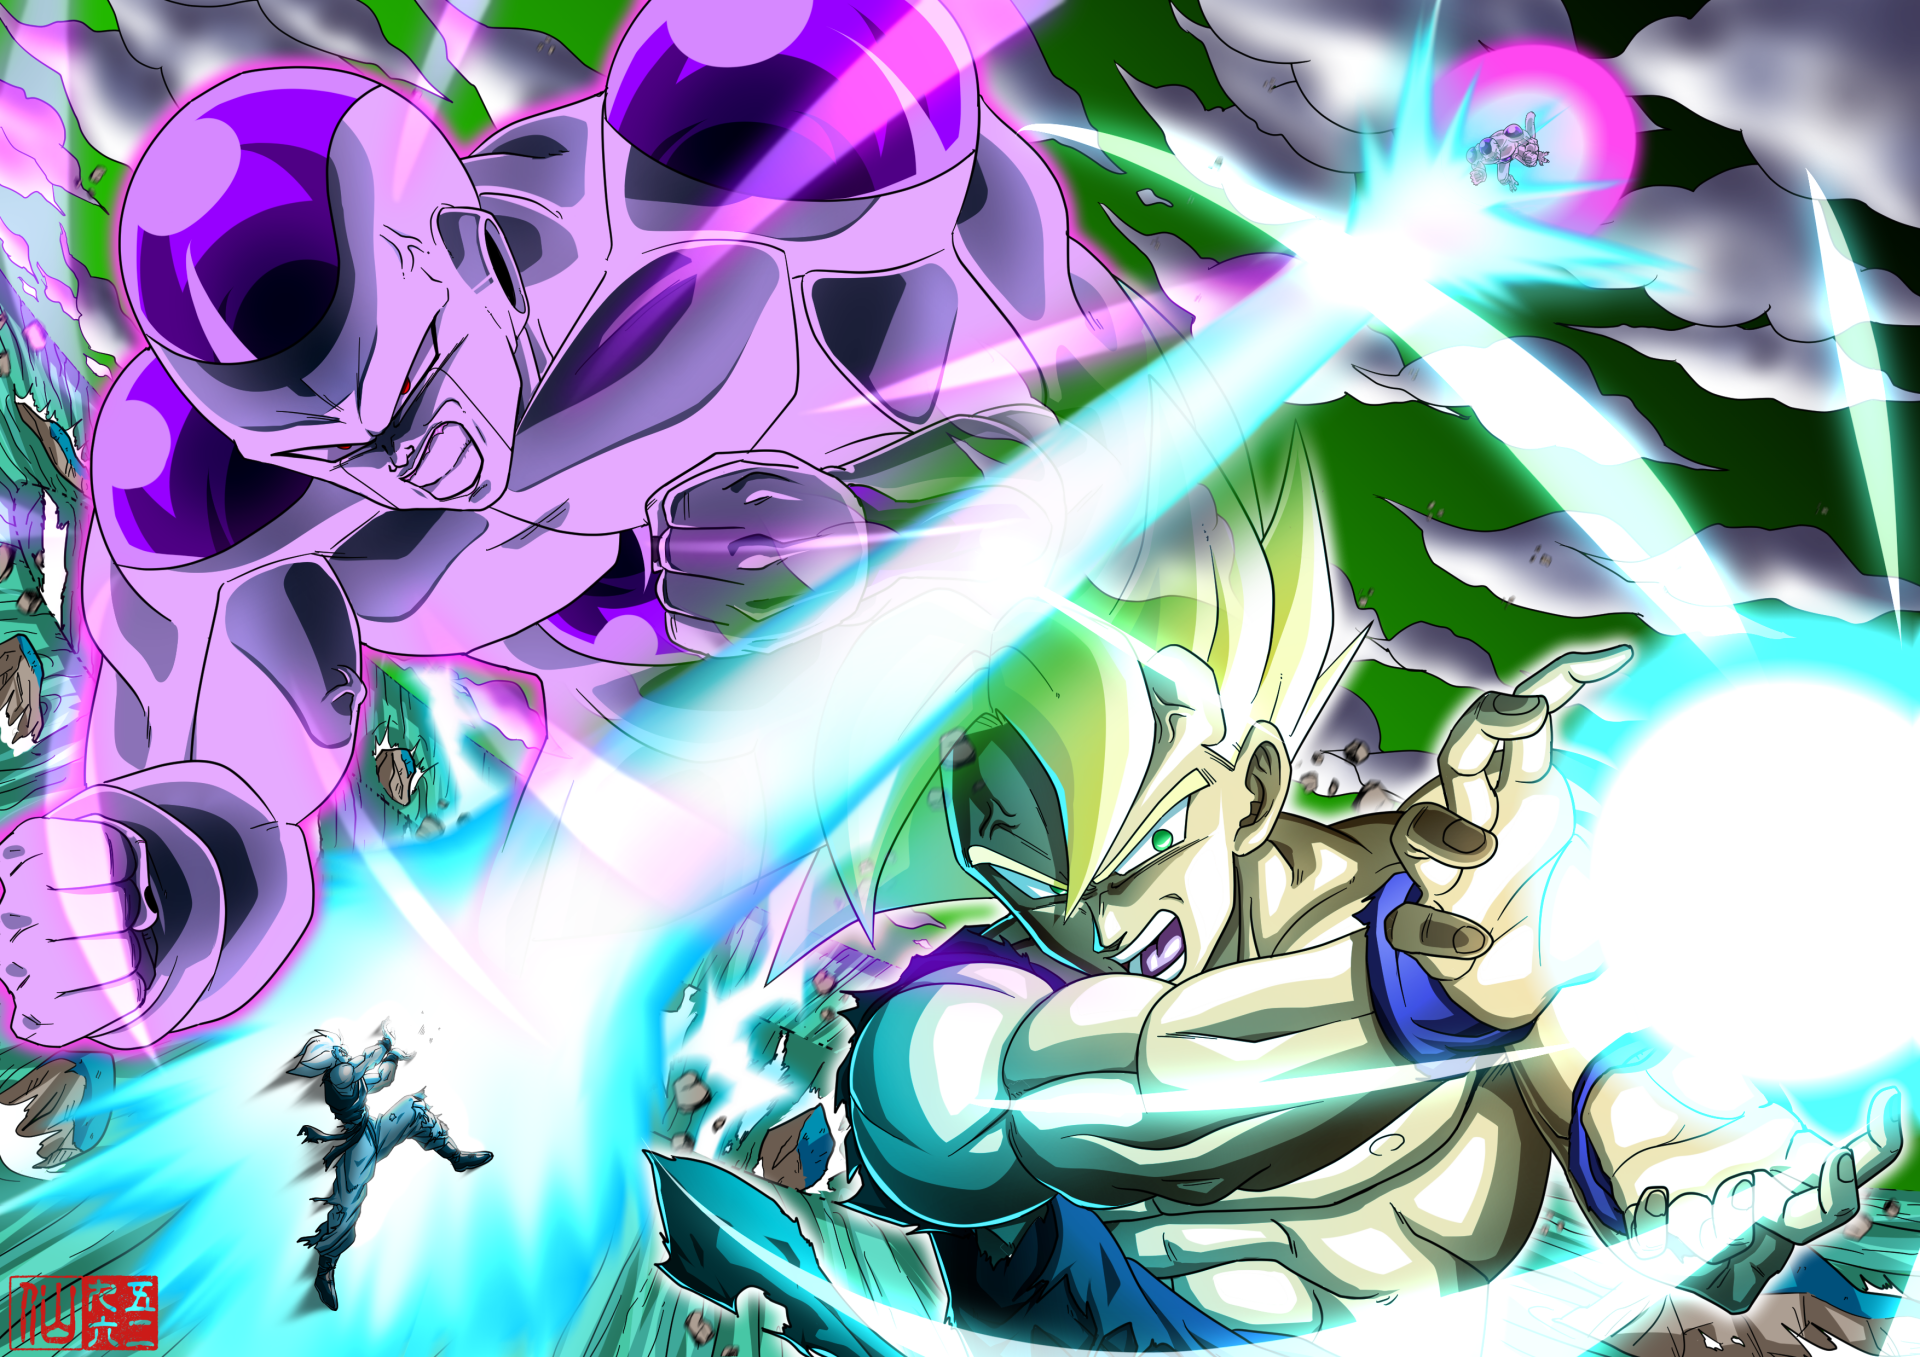 Goku Vs Freeza HD Wallpaper | Background Image | 3508x2480 | ID:1002098 - Wallpaper Abyss